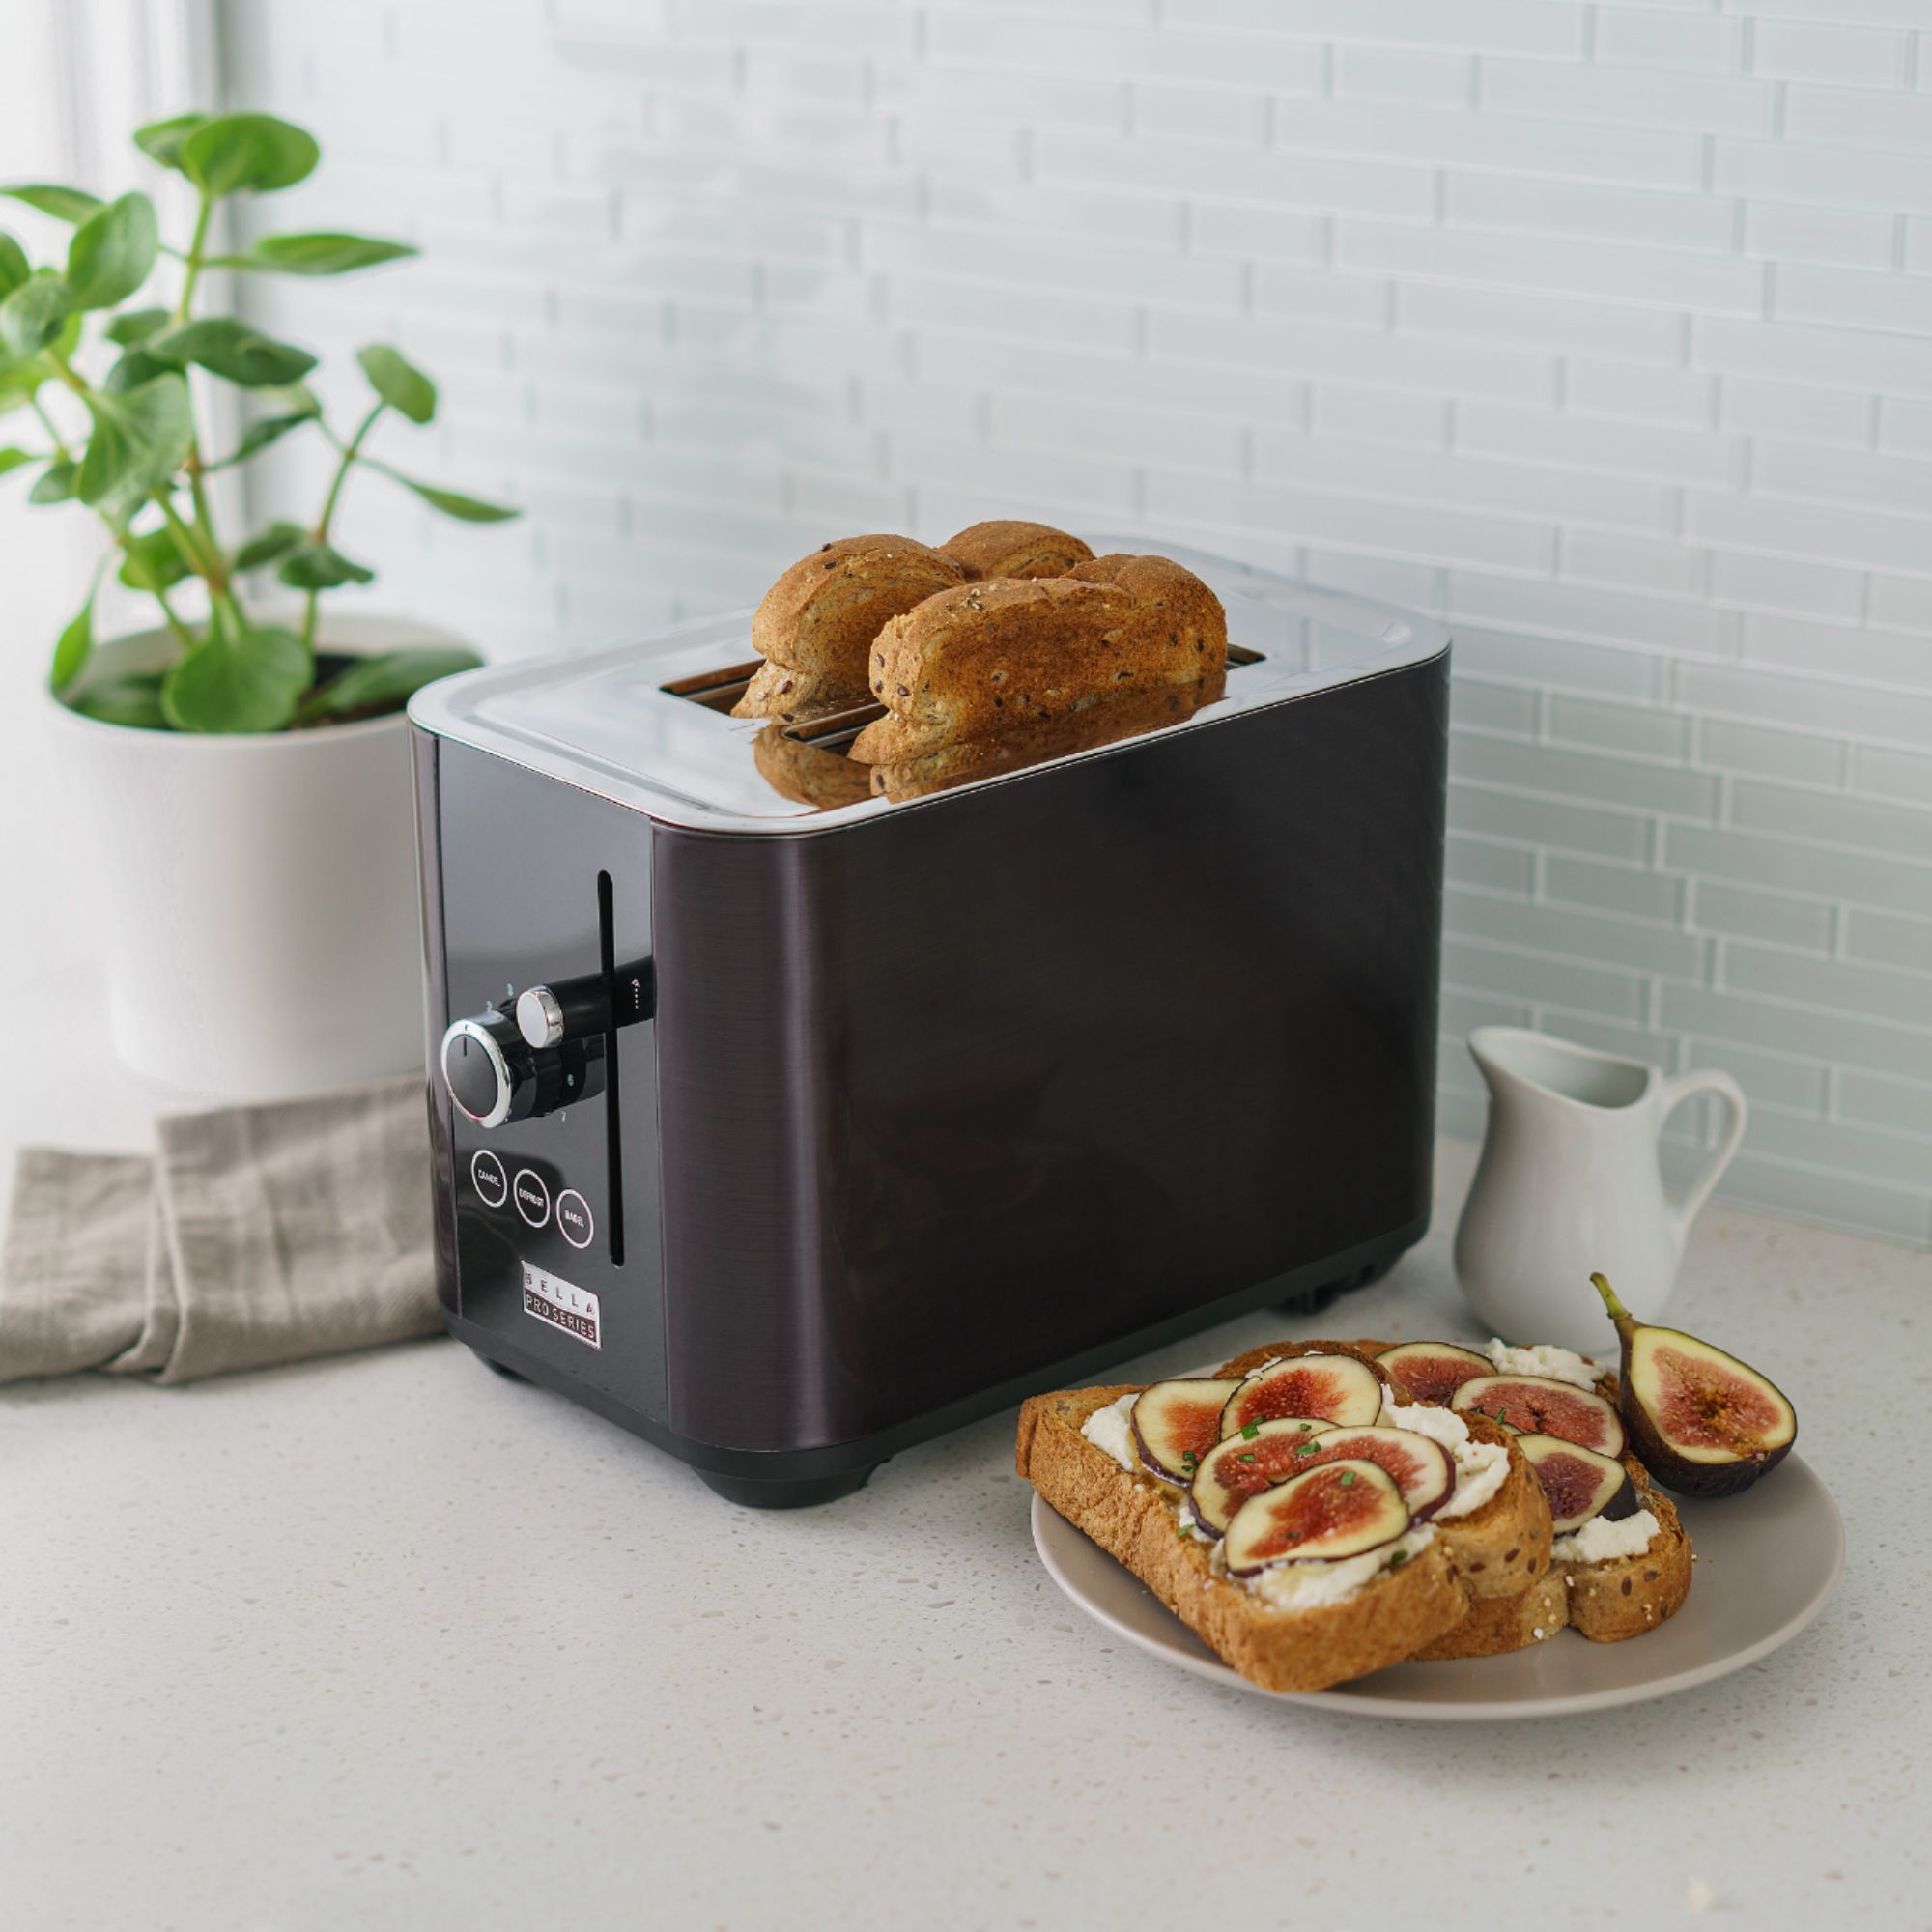 Best Buy: Bella Pro Series 4-Slice Digital Touchscreen Toaster Stainless  Steel 90105